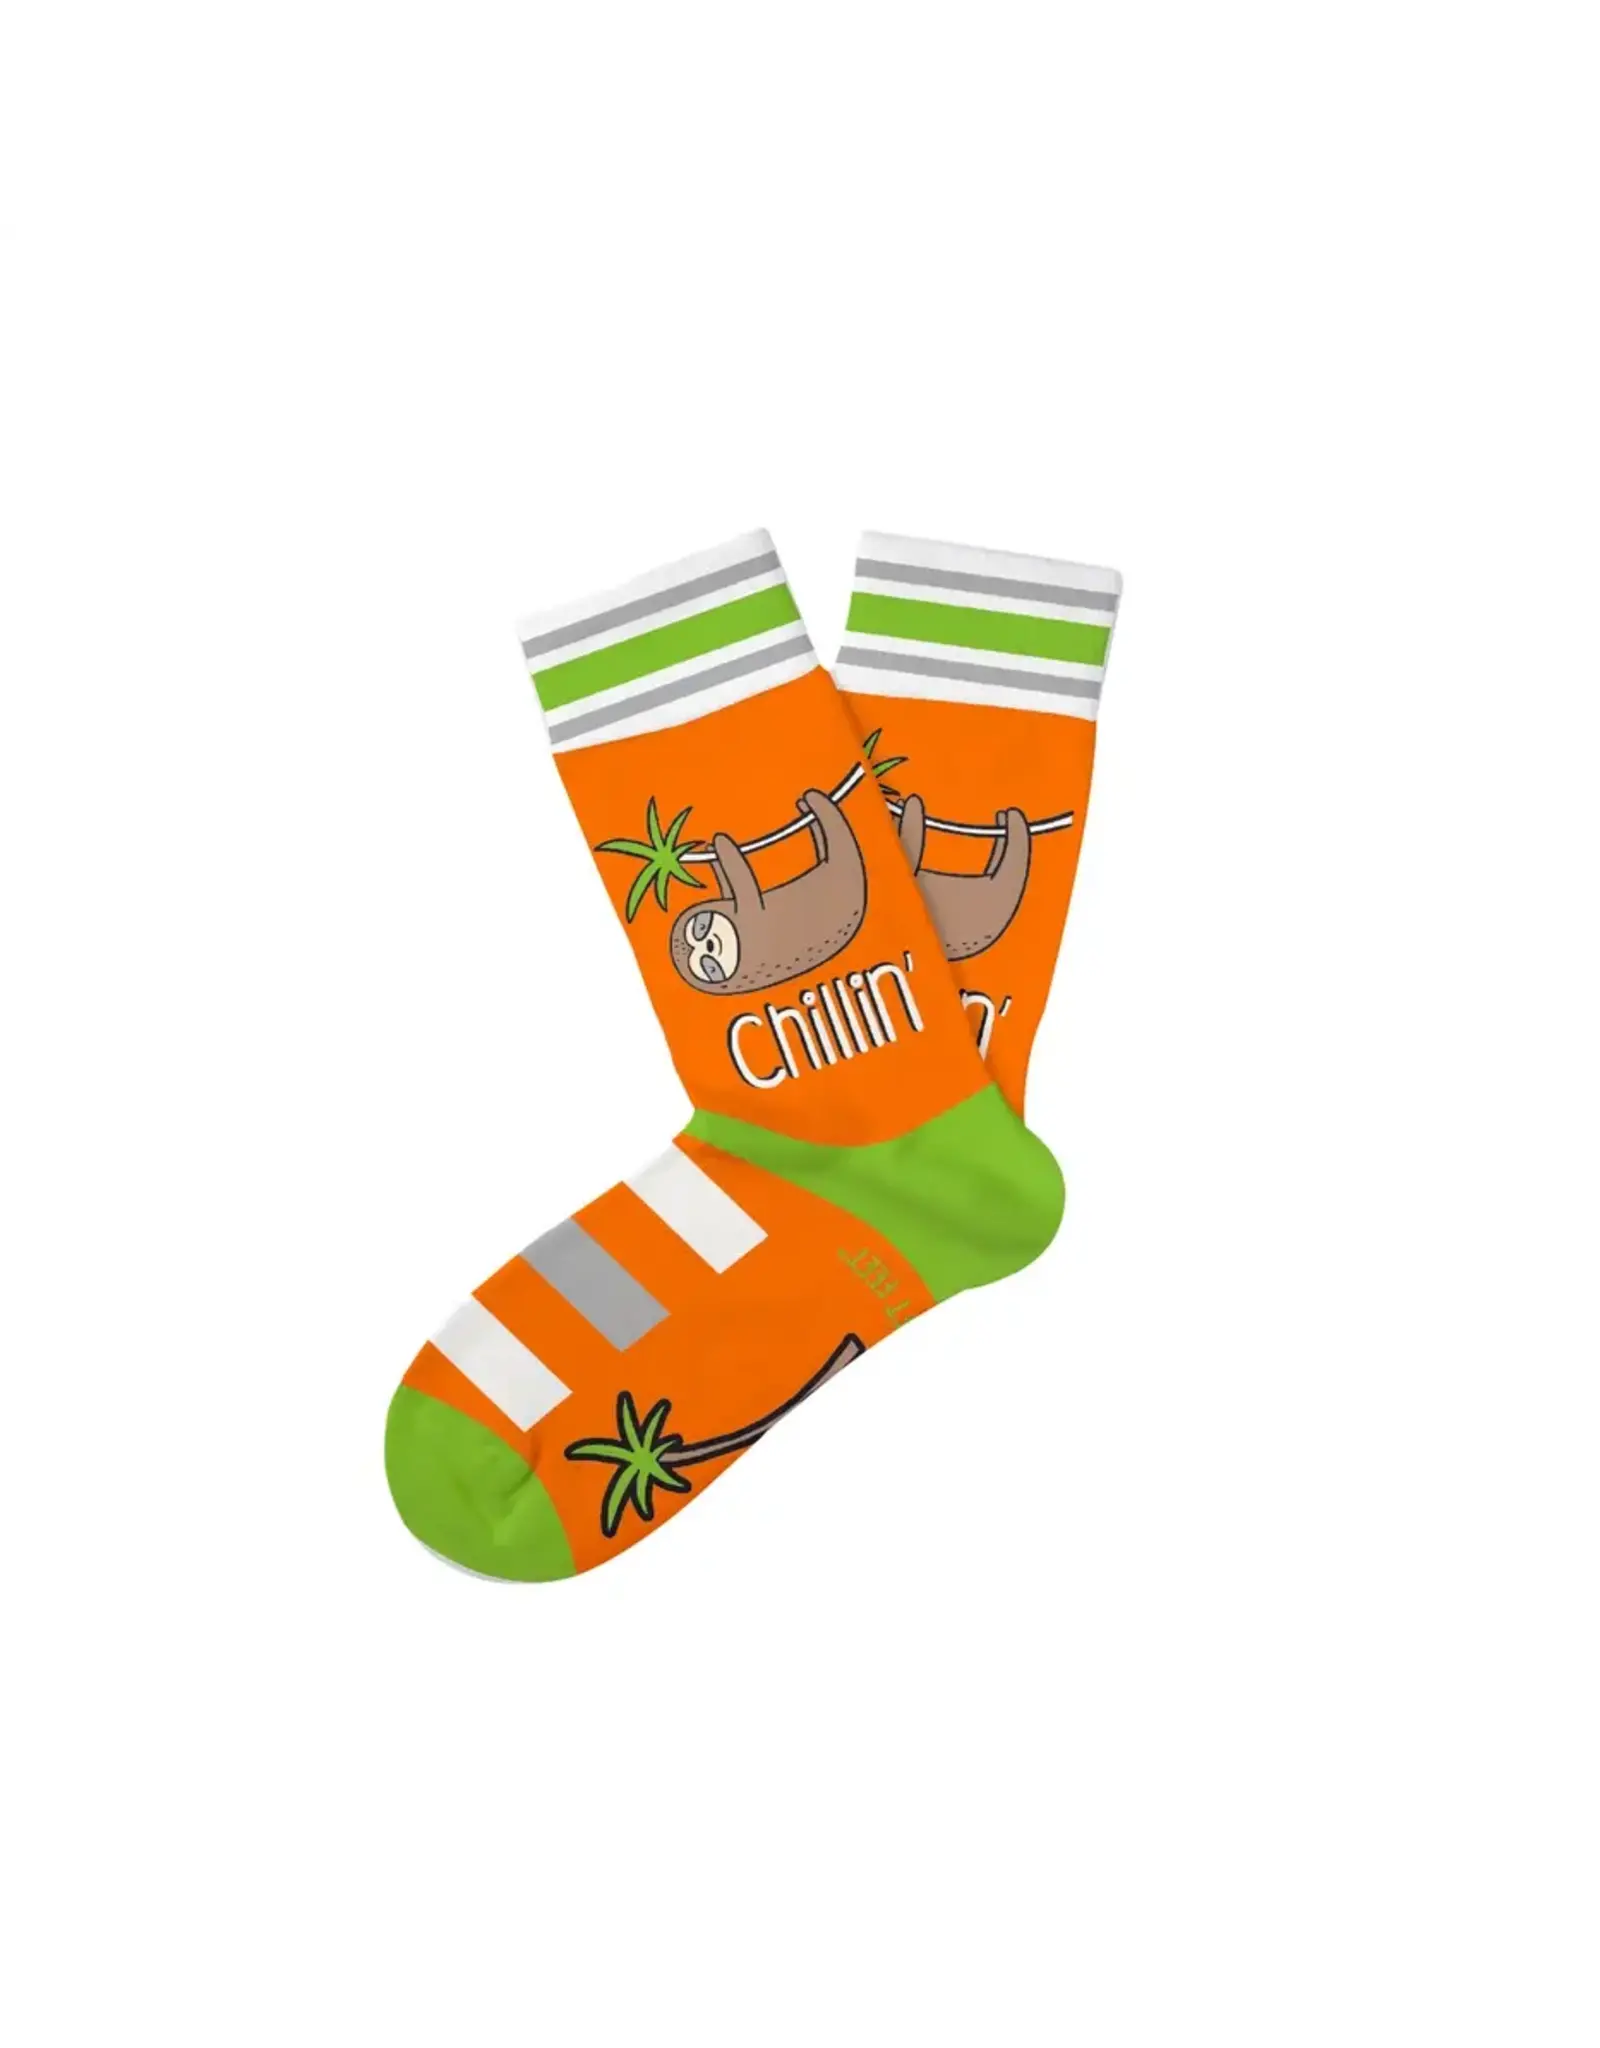 Tween Socks - Just Chillin' (Shoe Size 1-5)